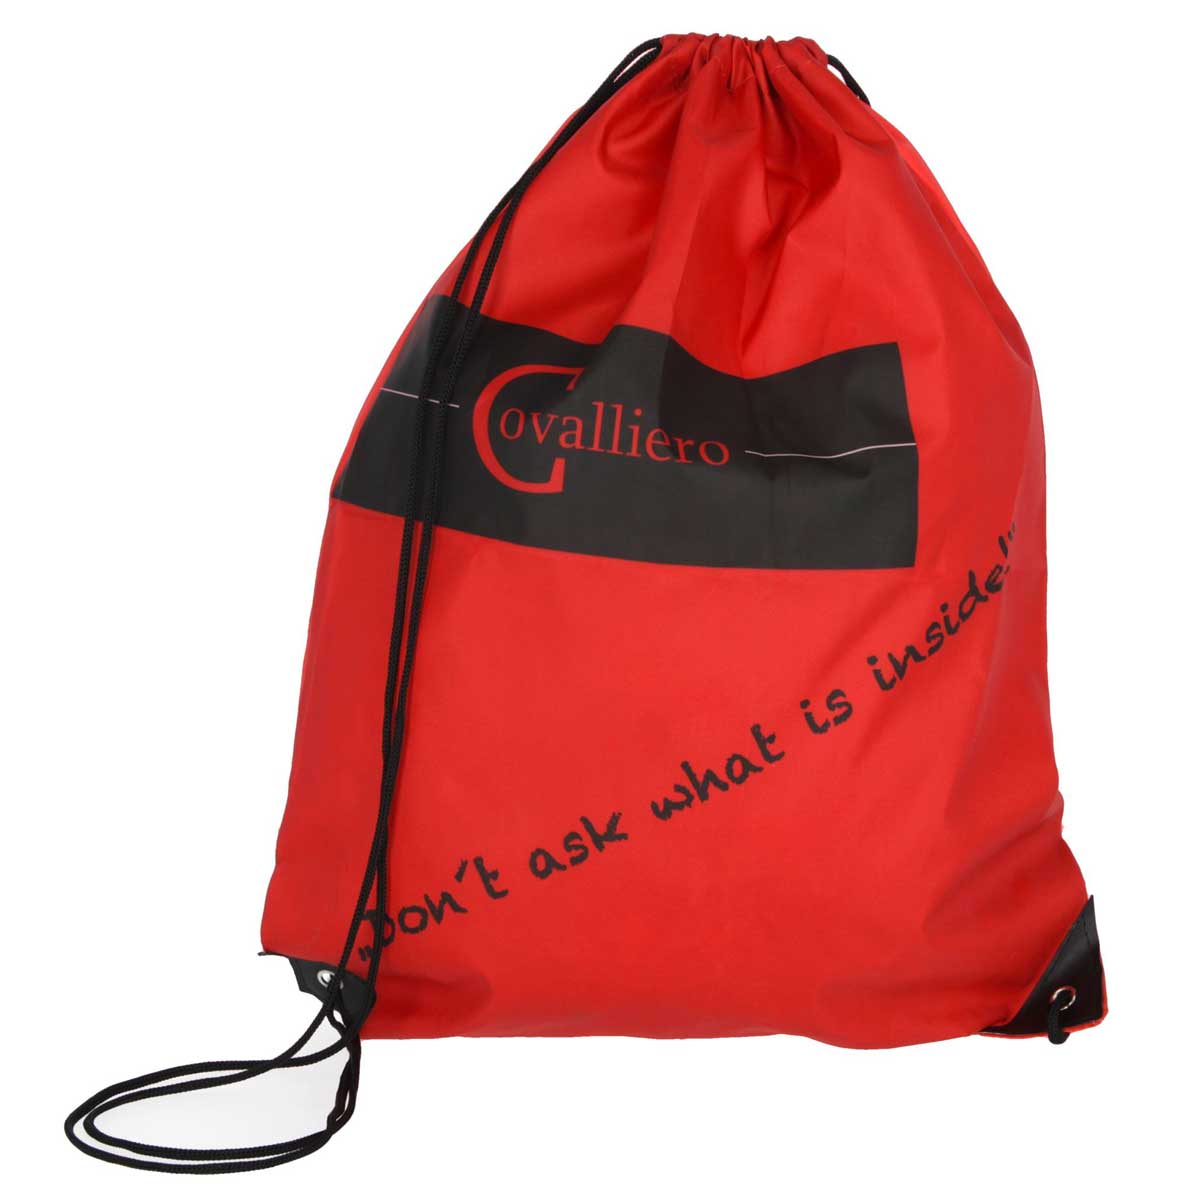 Covalliero Grooming bag Lilli